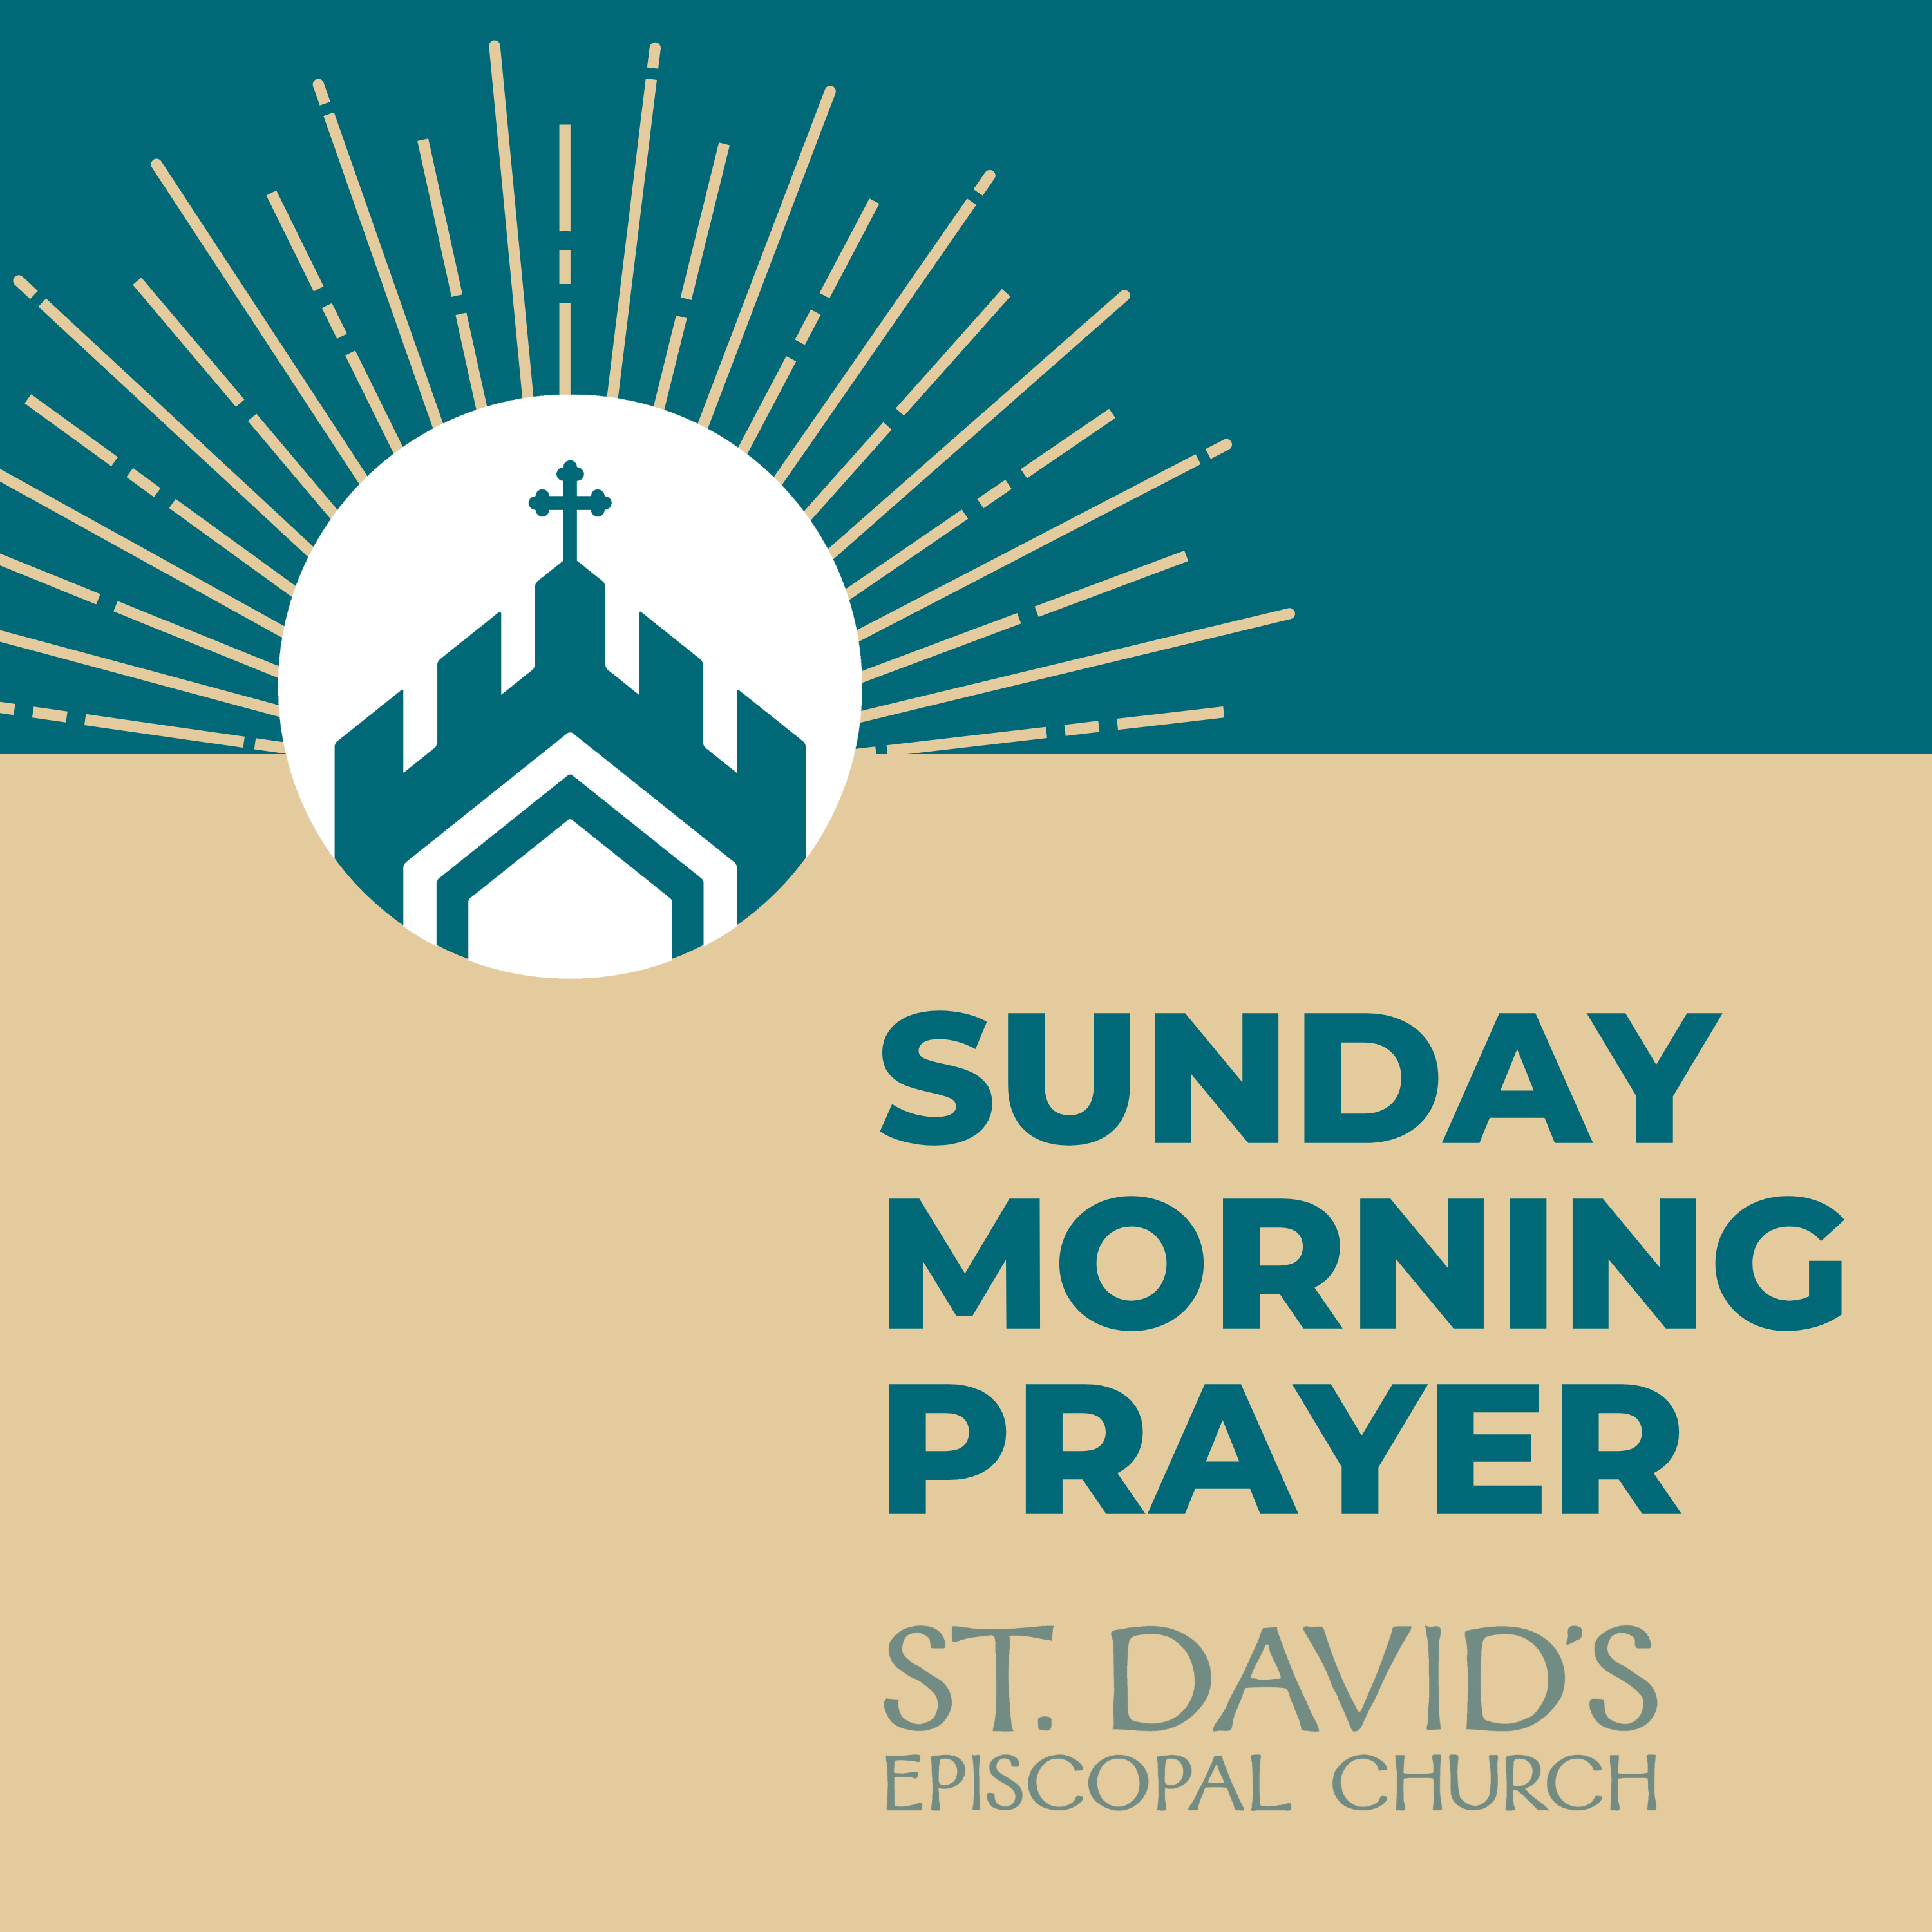 Sunday Morning Prayer: Rite Two, Year 2, 15th Sunday after Pentecost